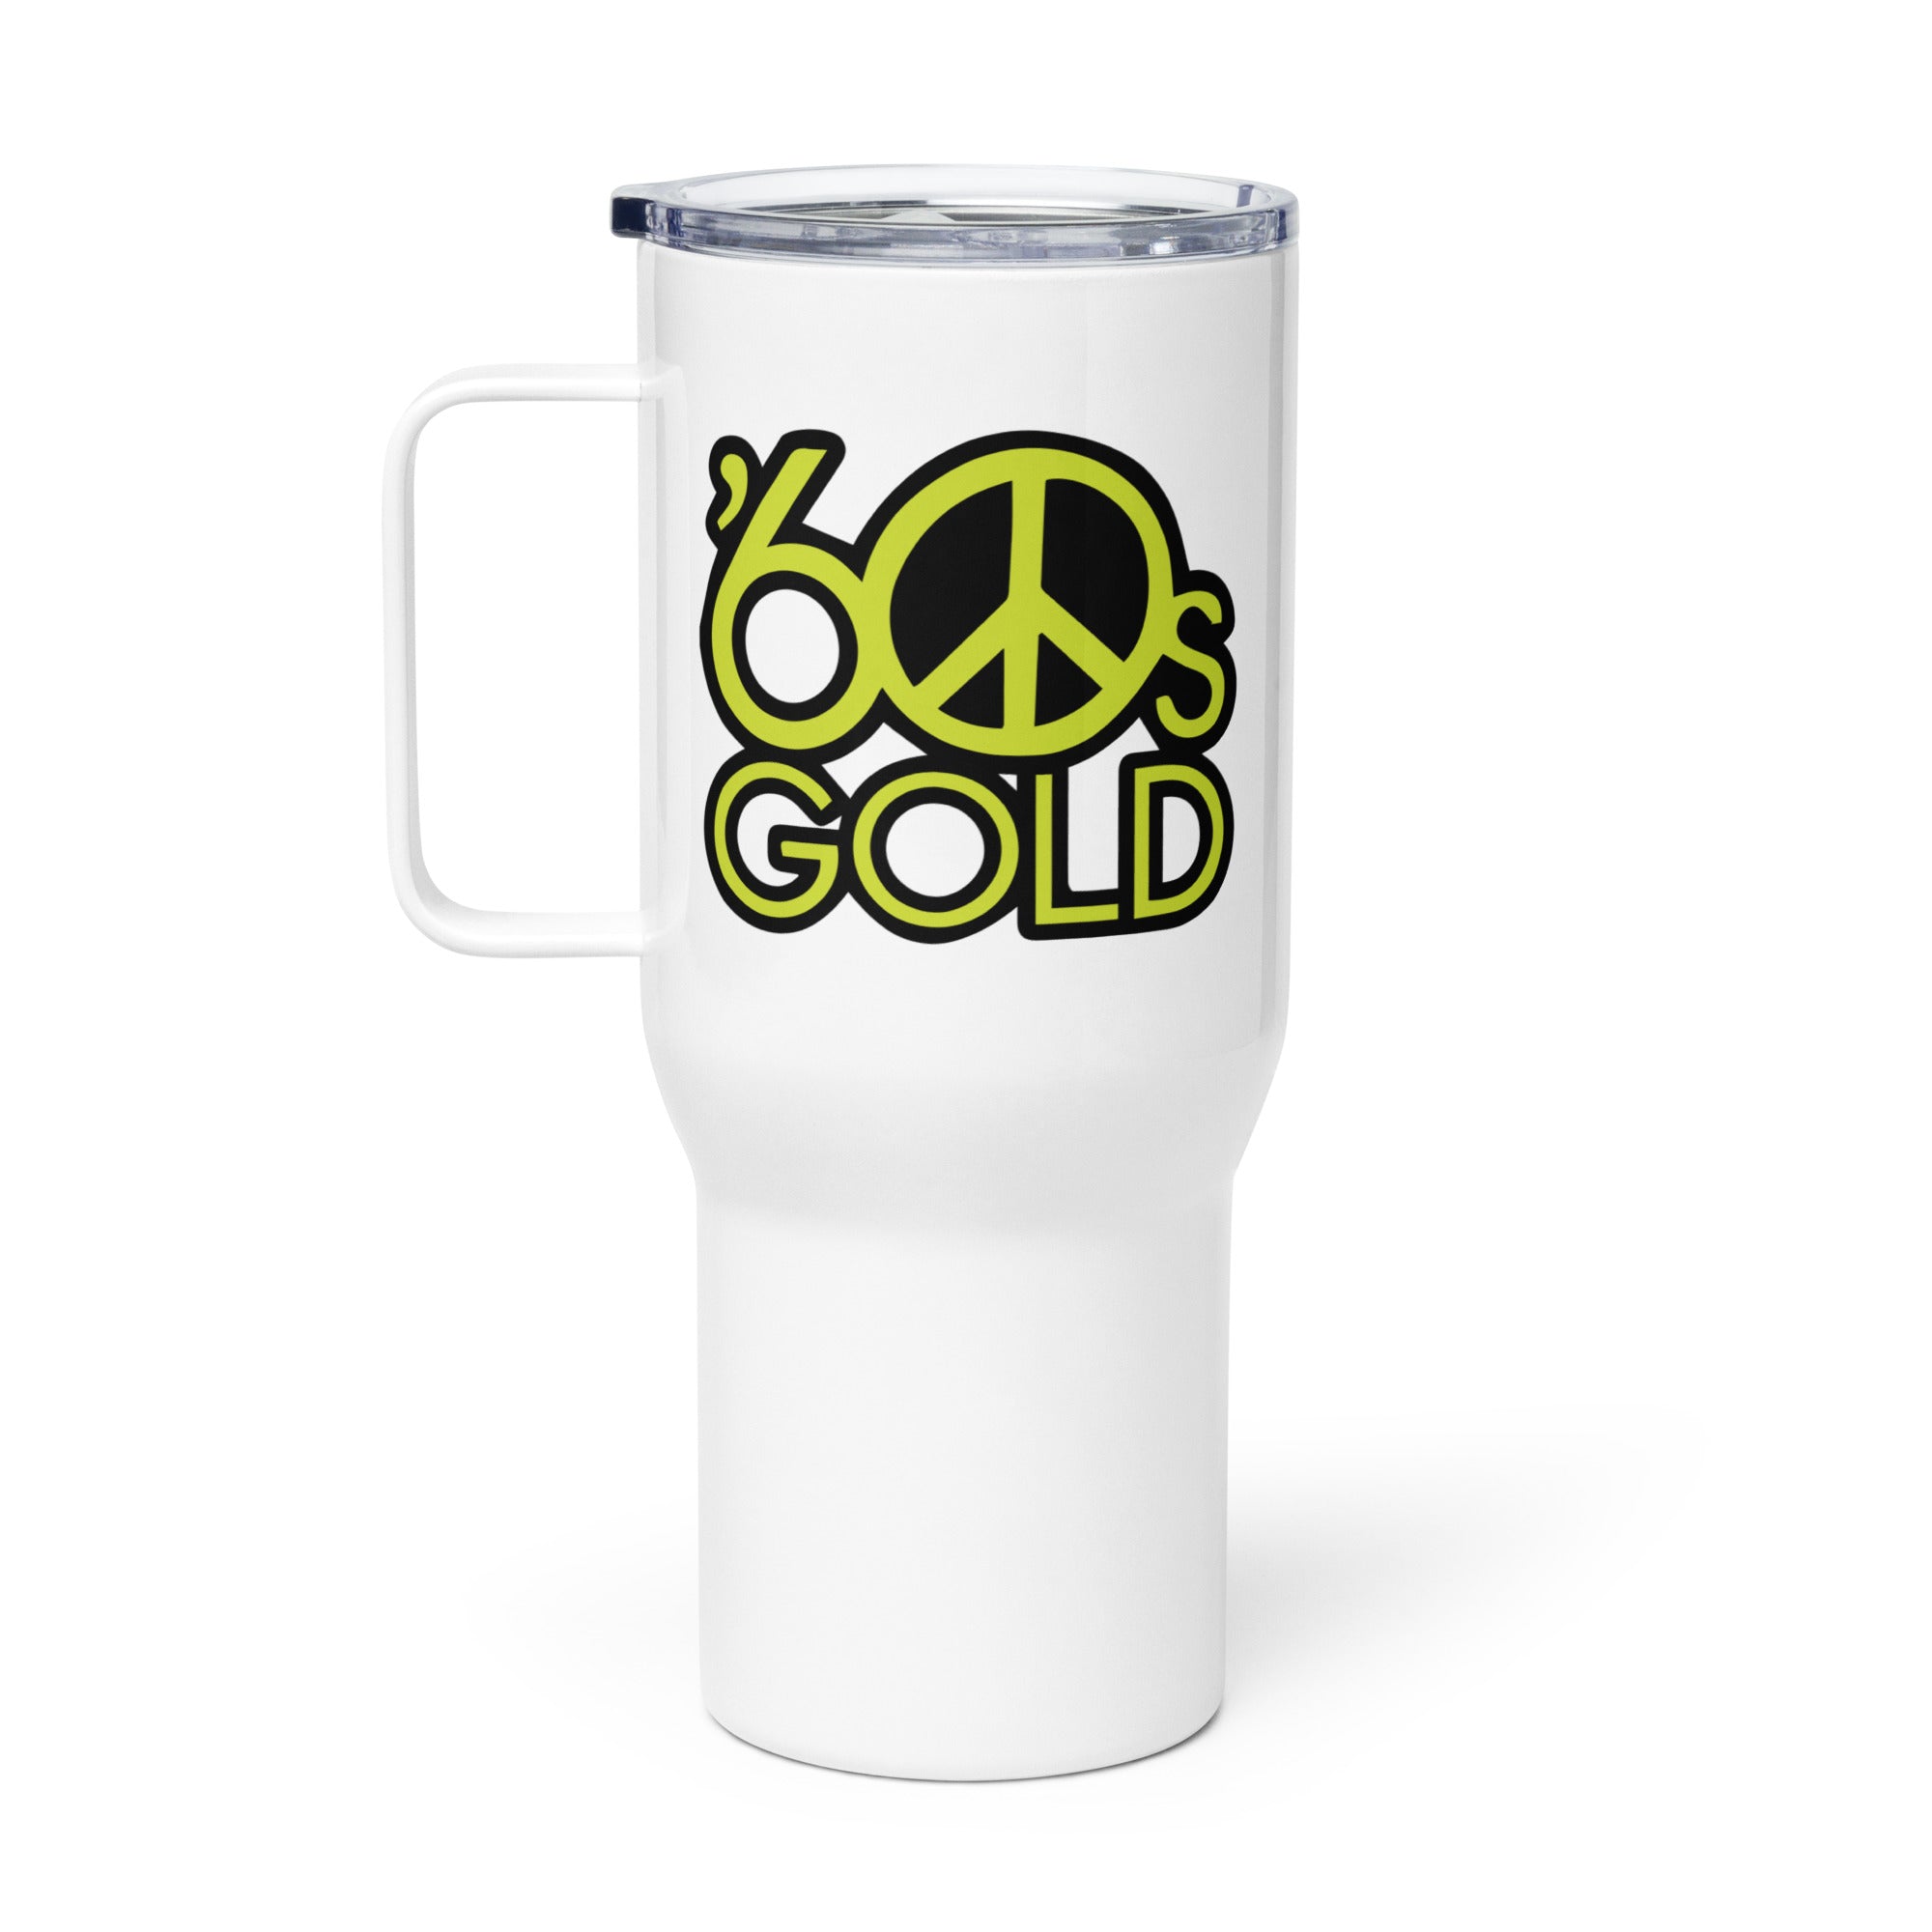 60s Gold: Travel Mug